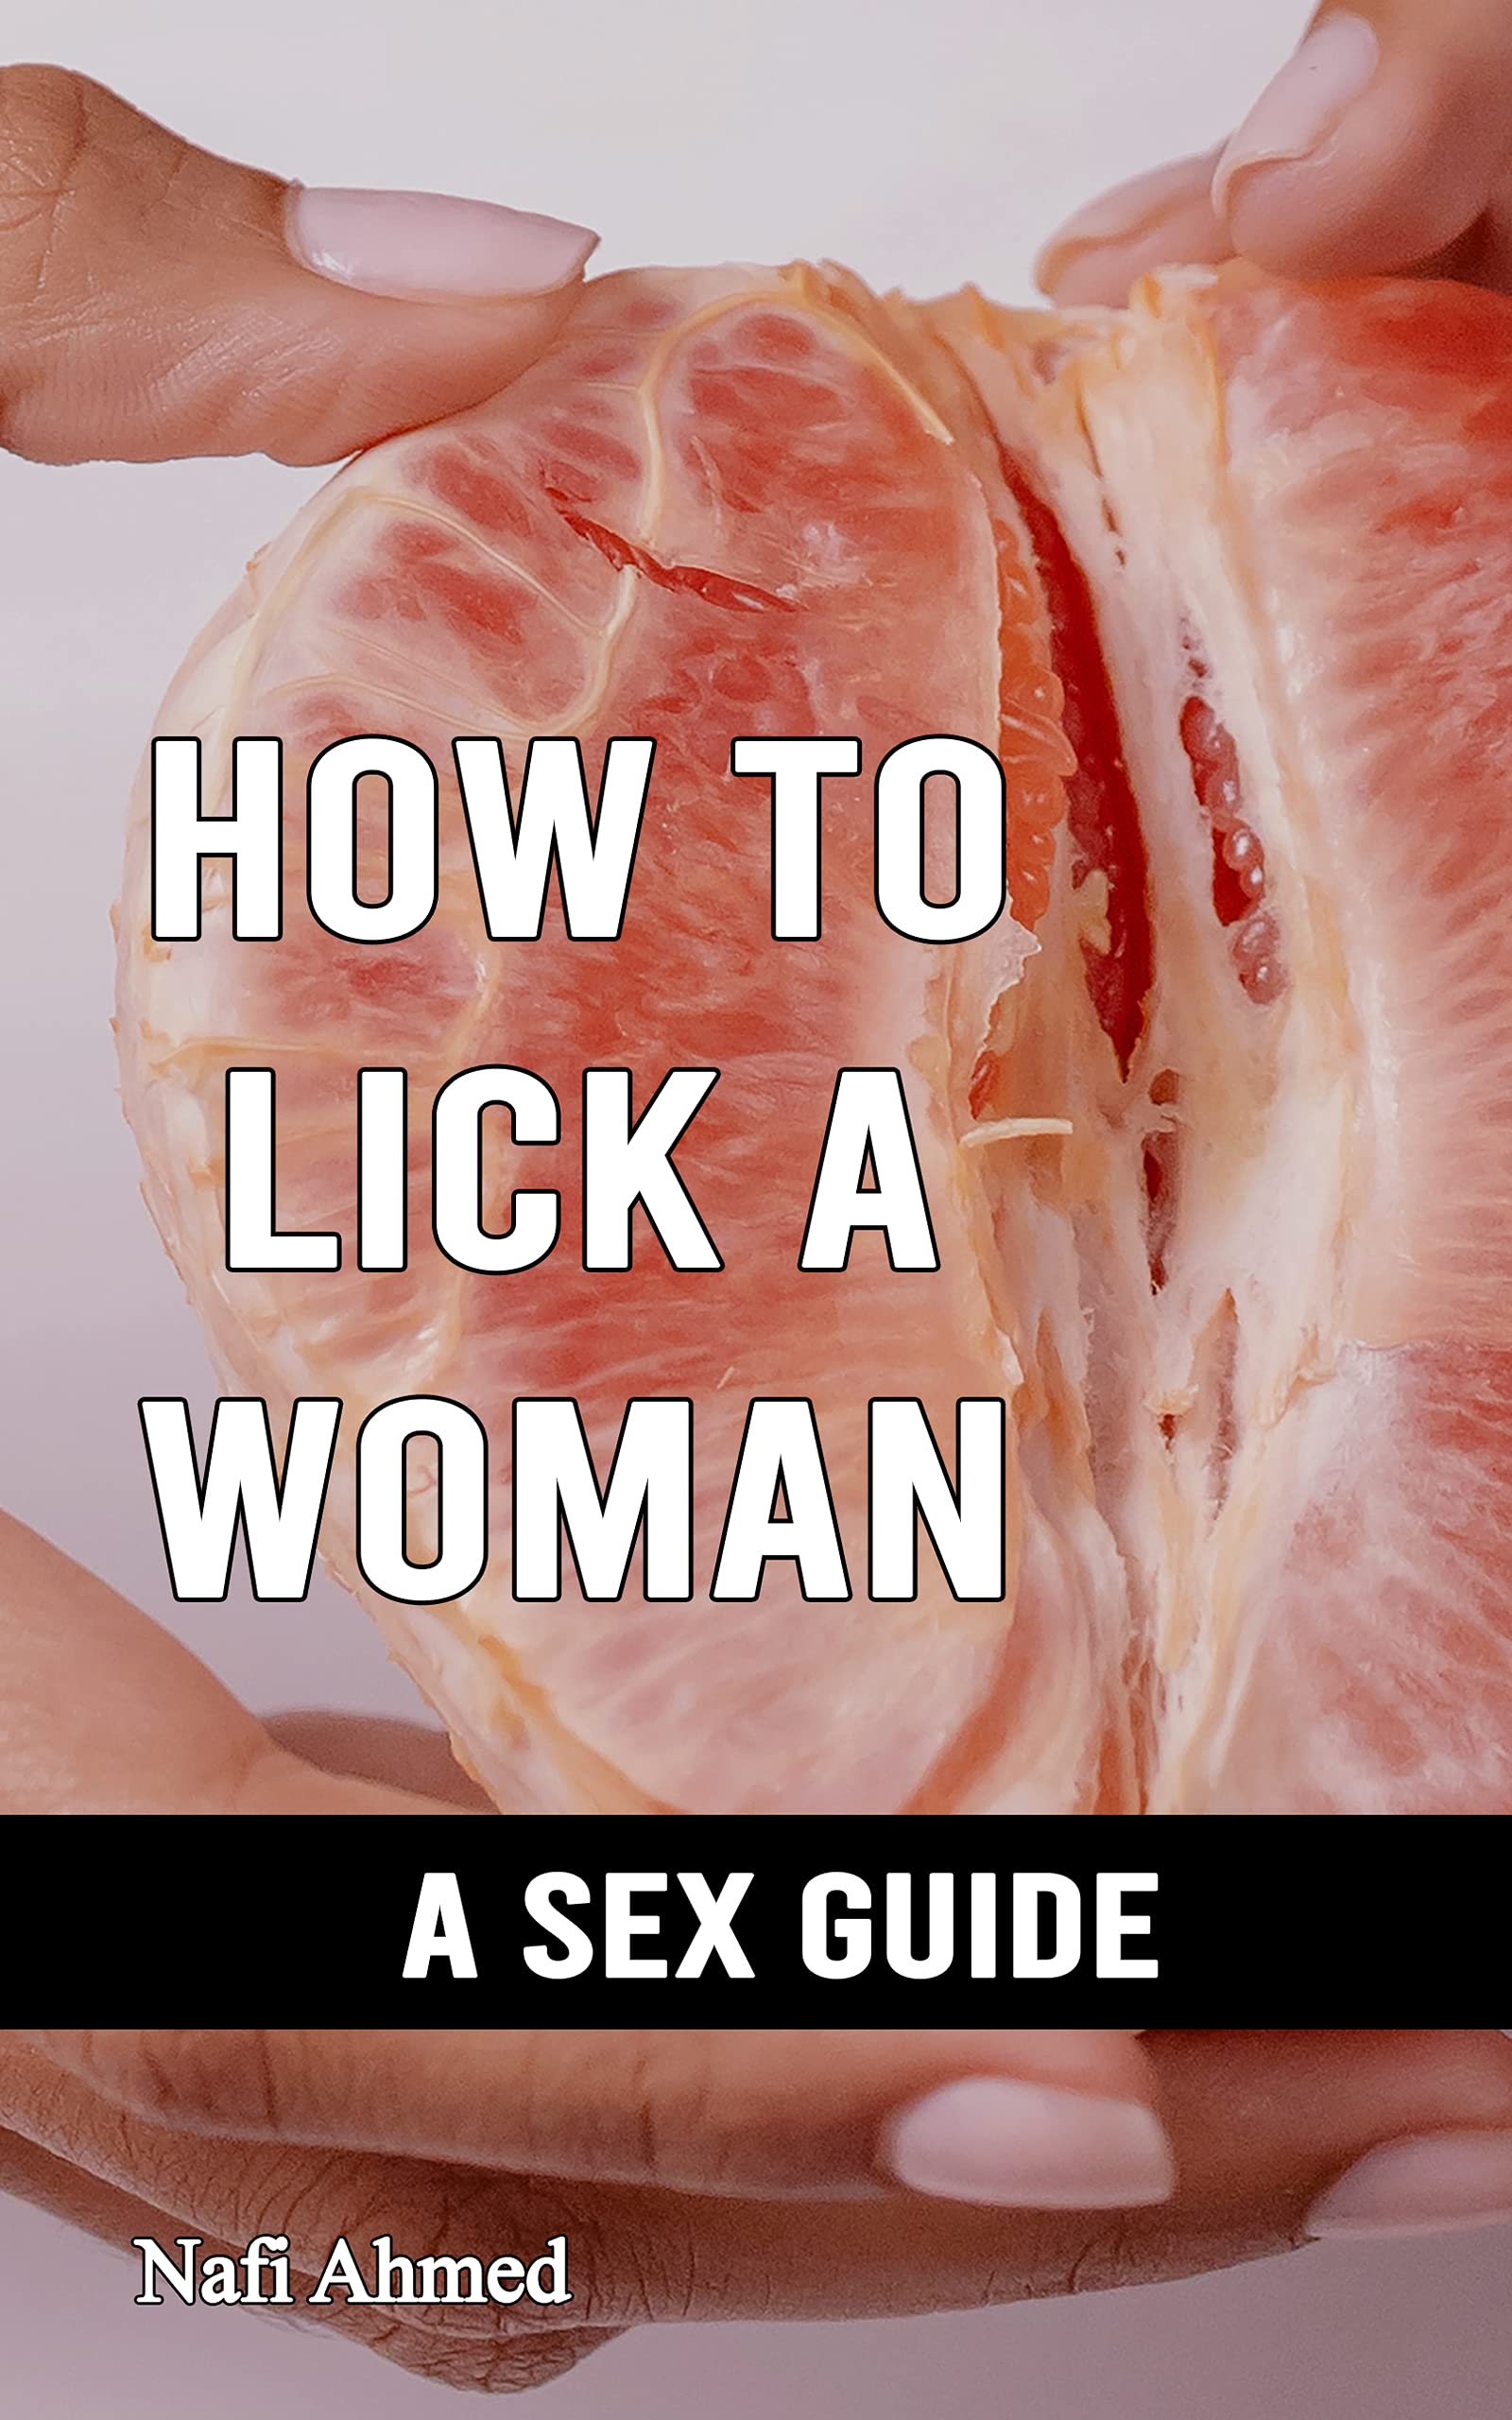 djon bascoe share how to lick cunt photos